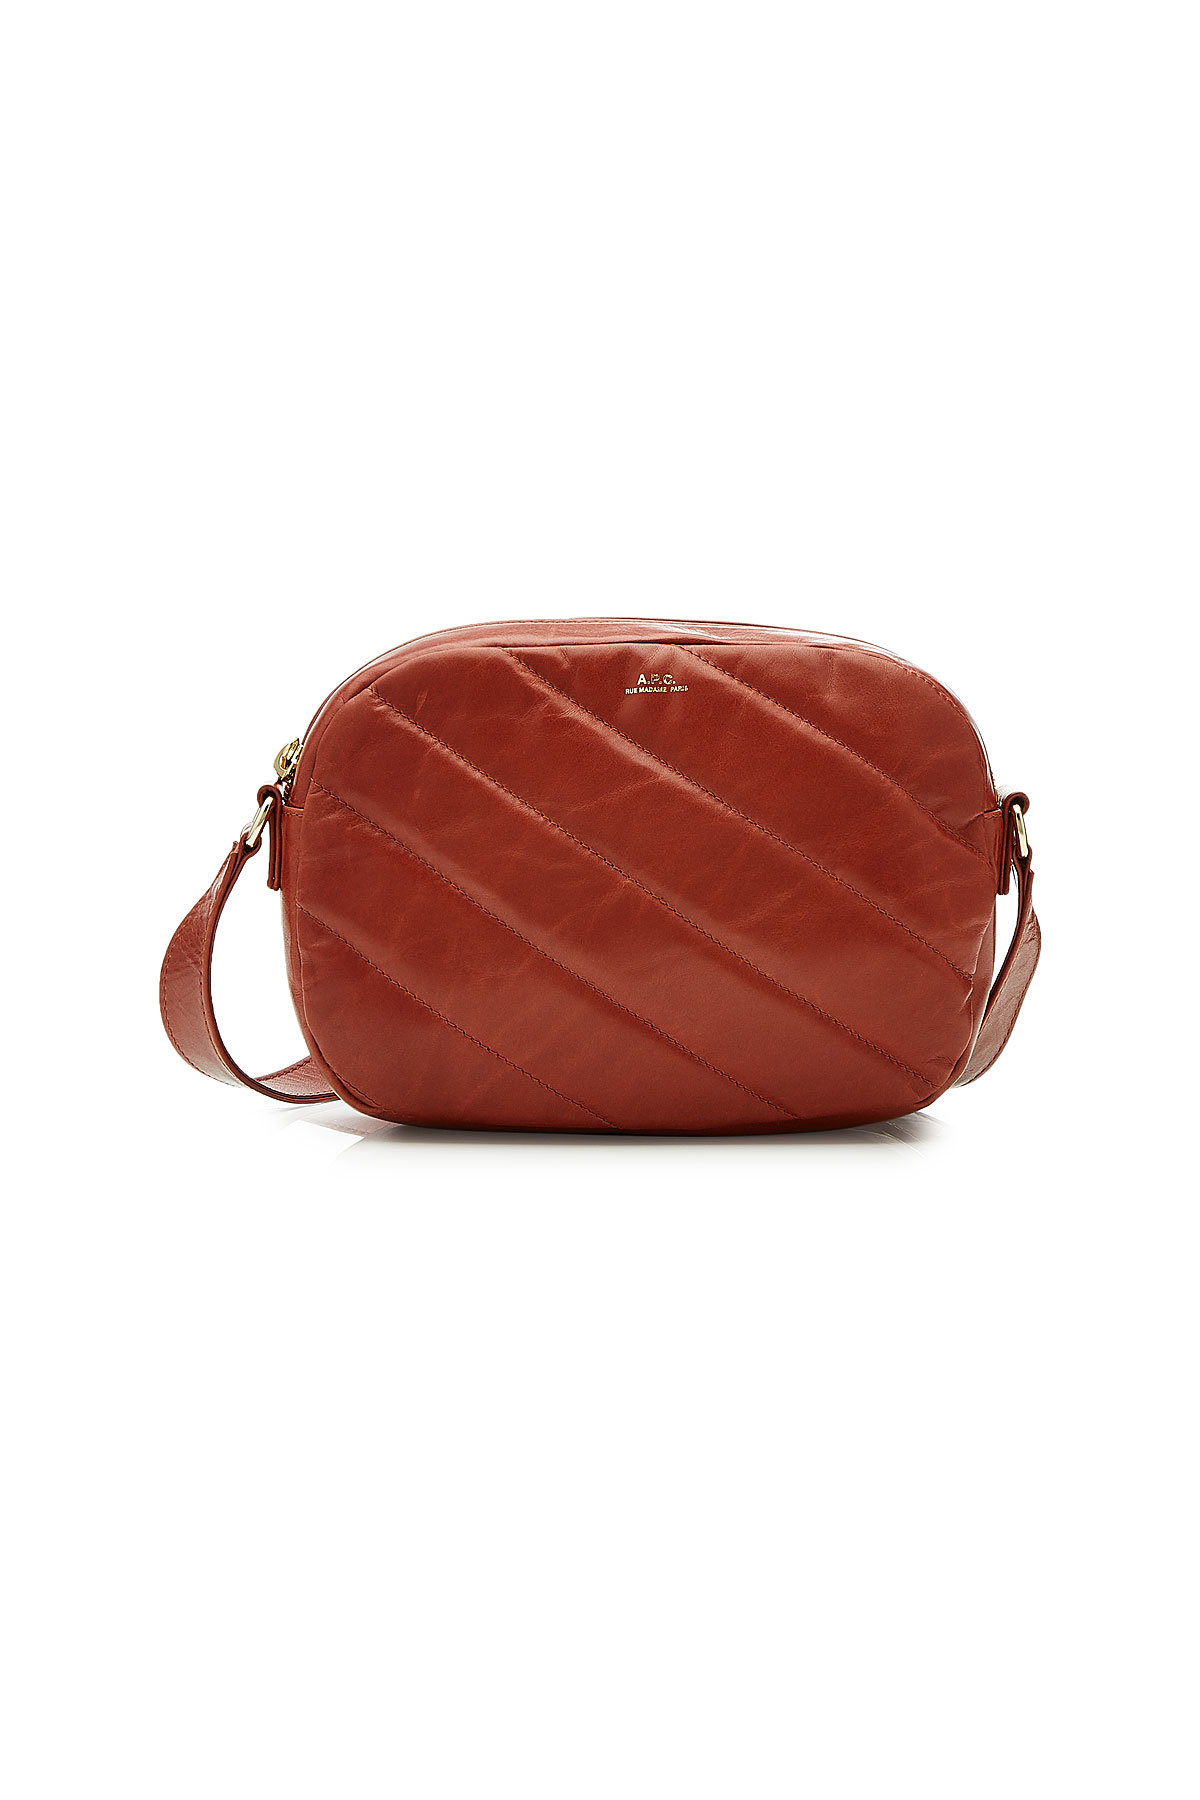 Meryl Leather Shoulder Bag by A.P.C.